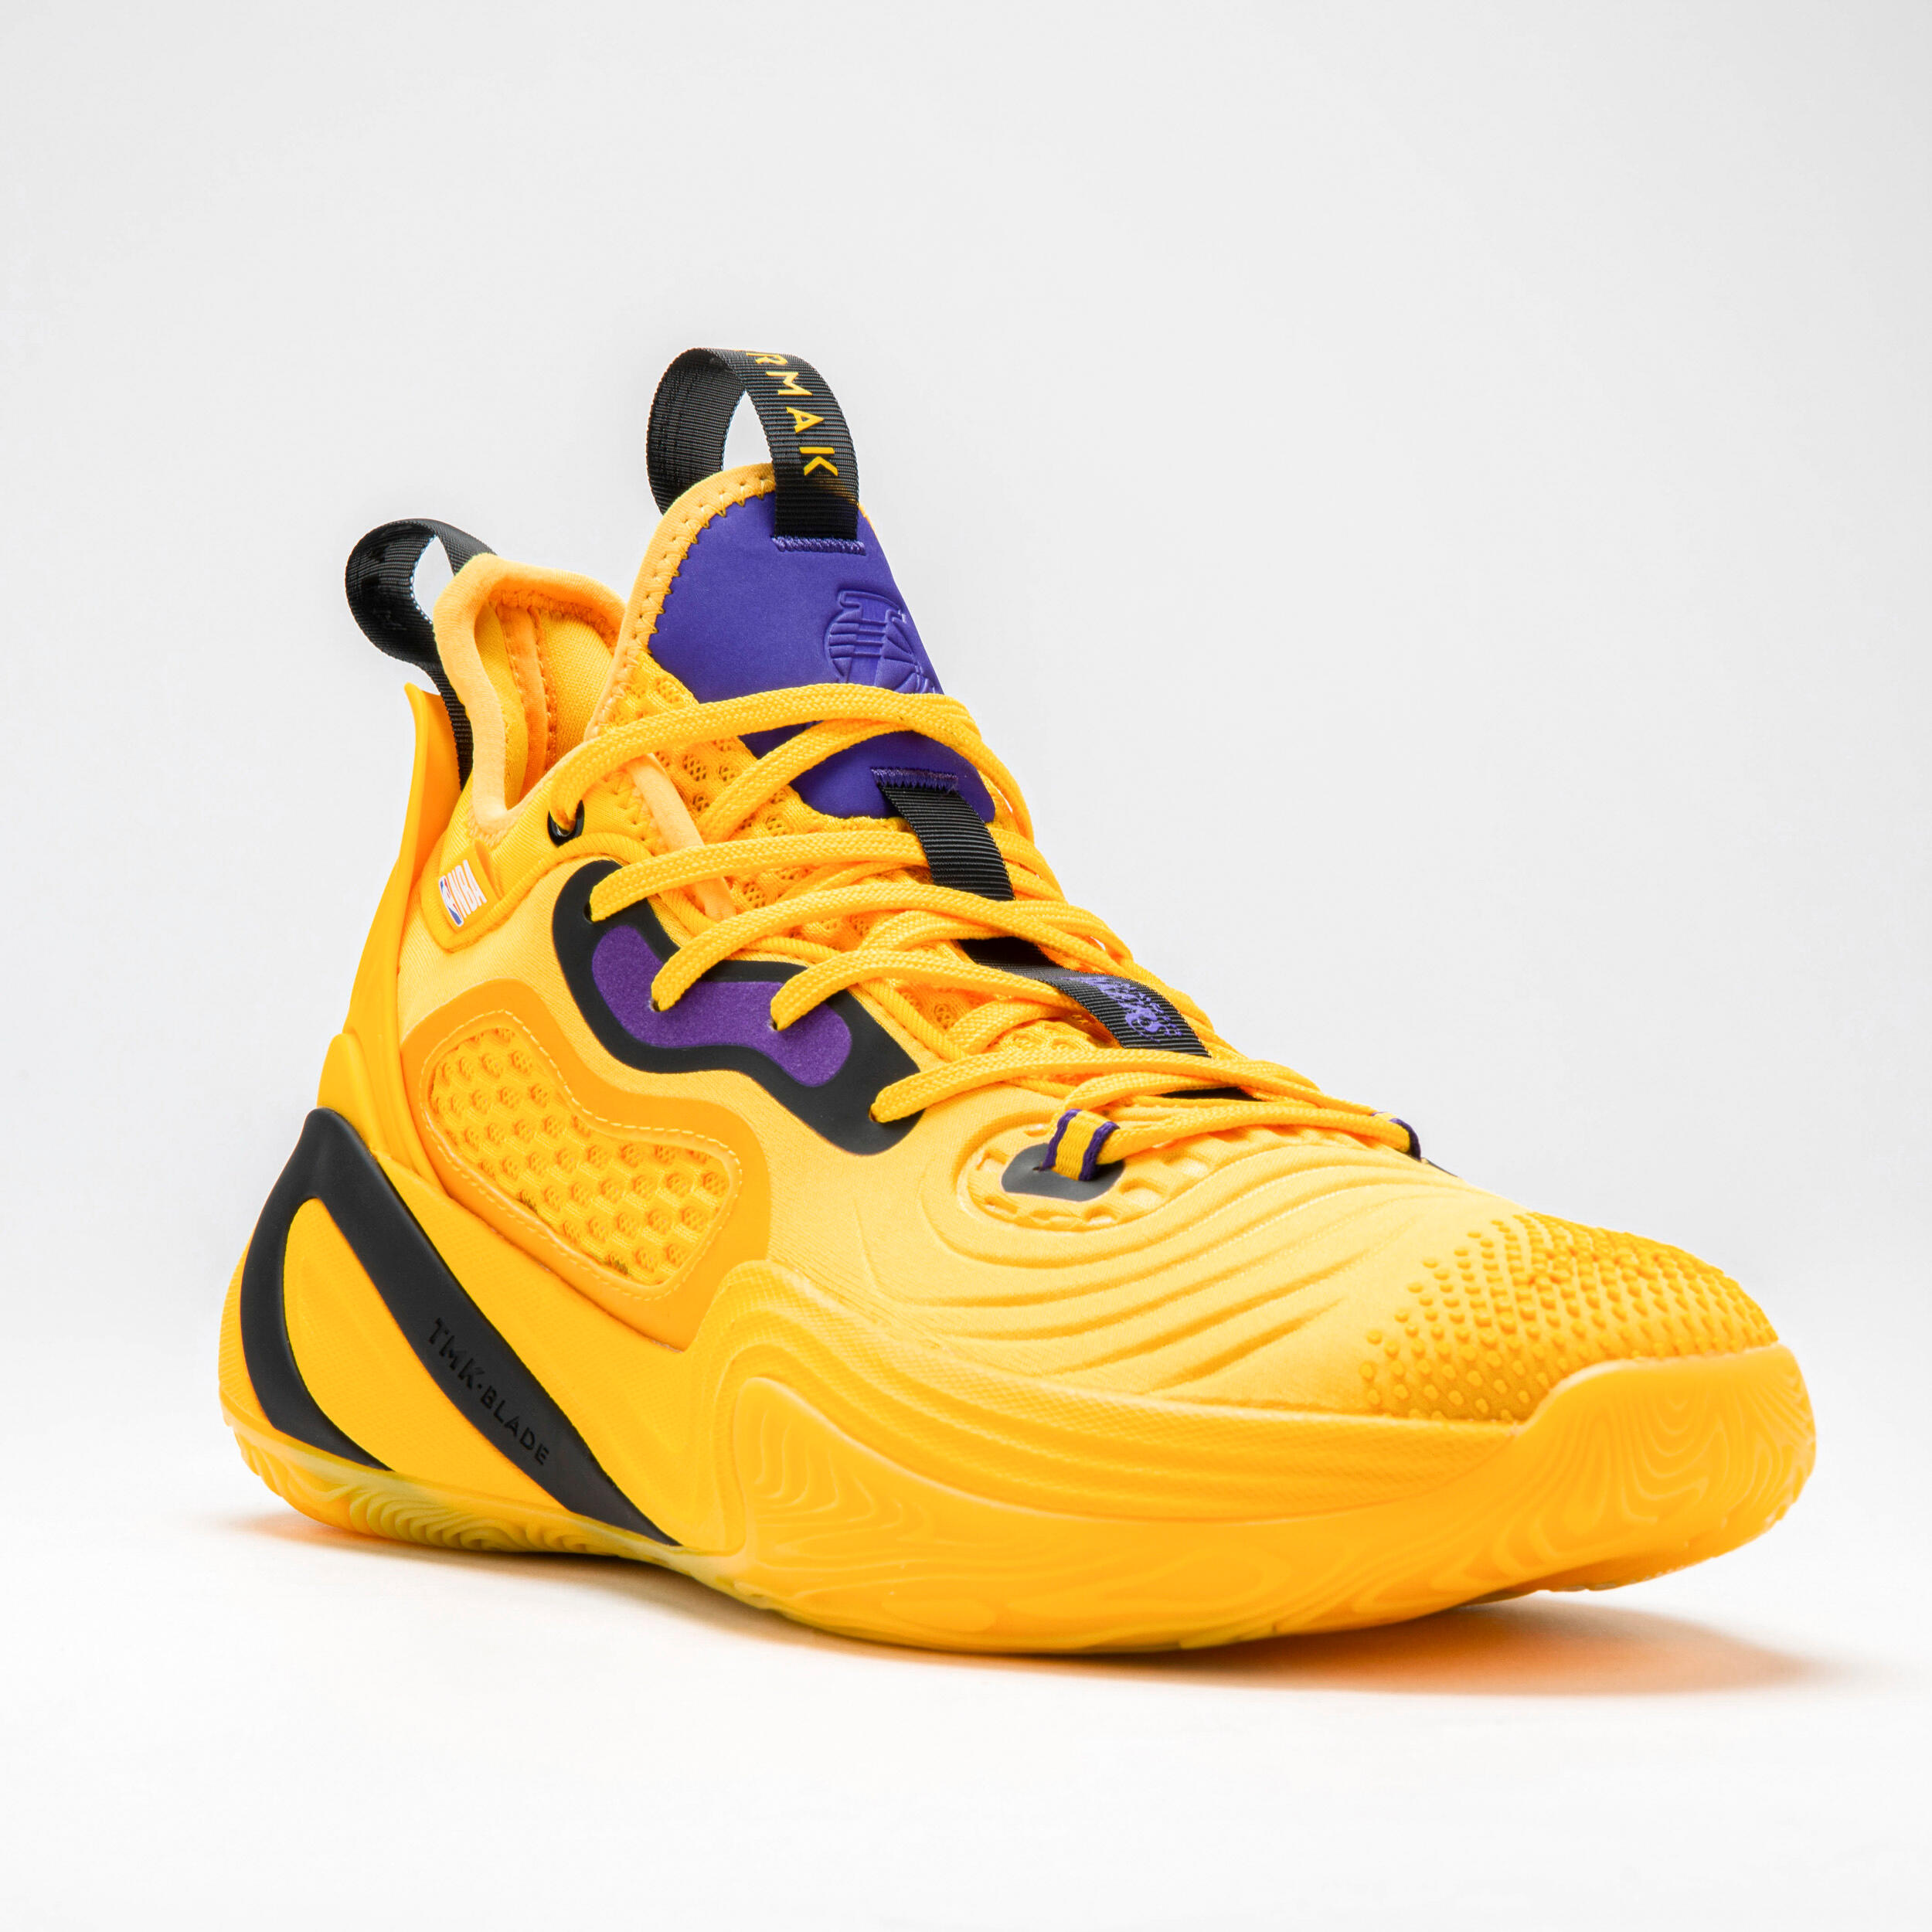 Men's/Women's Basketball Shoes SE900 - NBA Los Angeles Lakers/Yellow 3/7